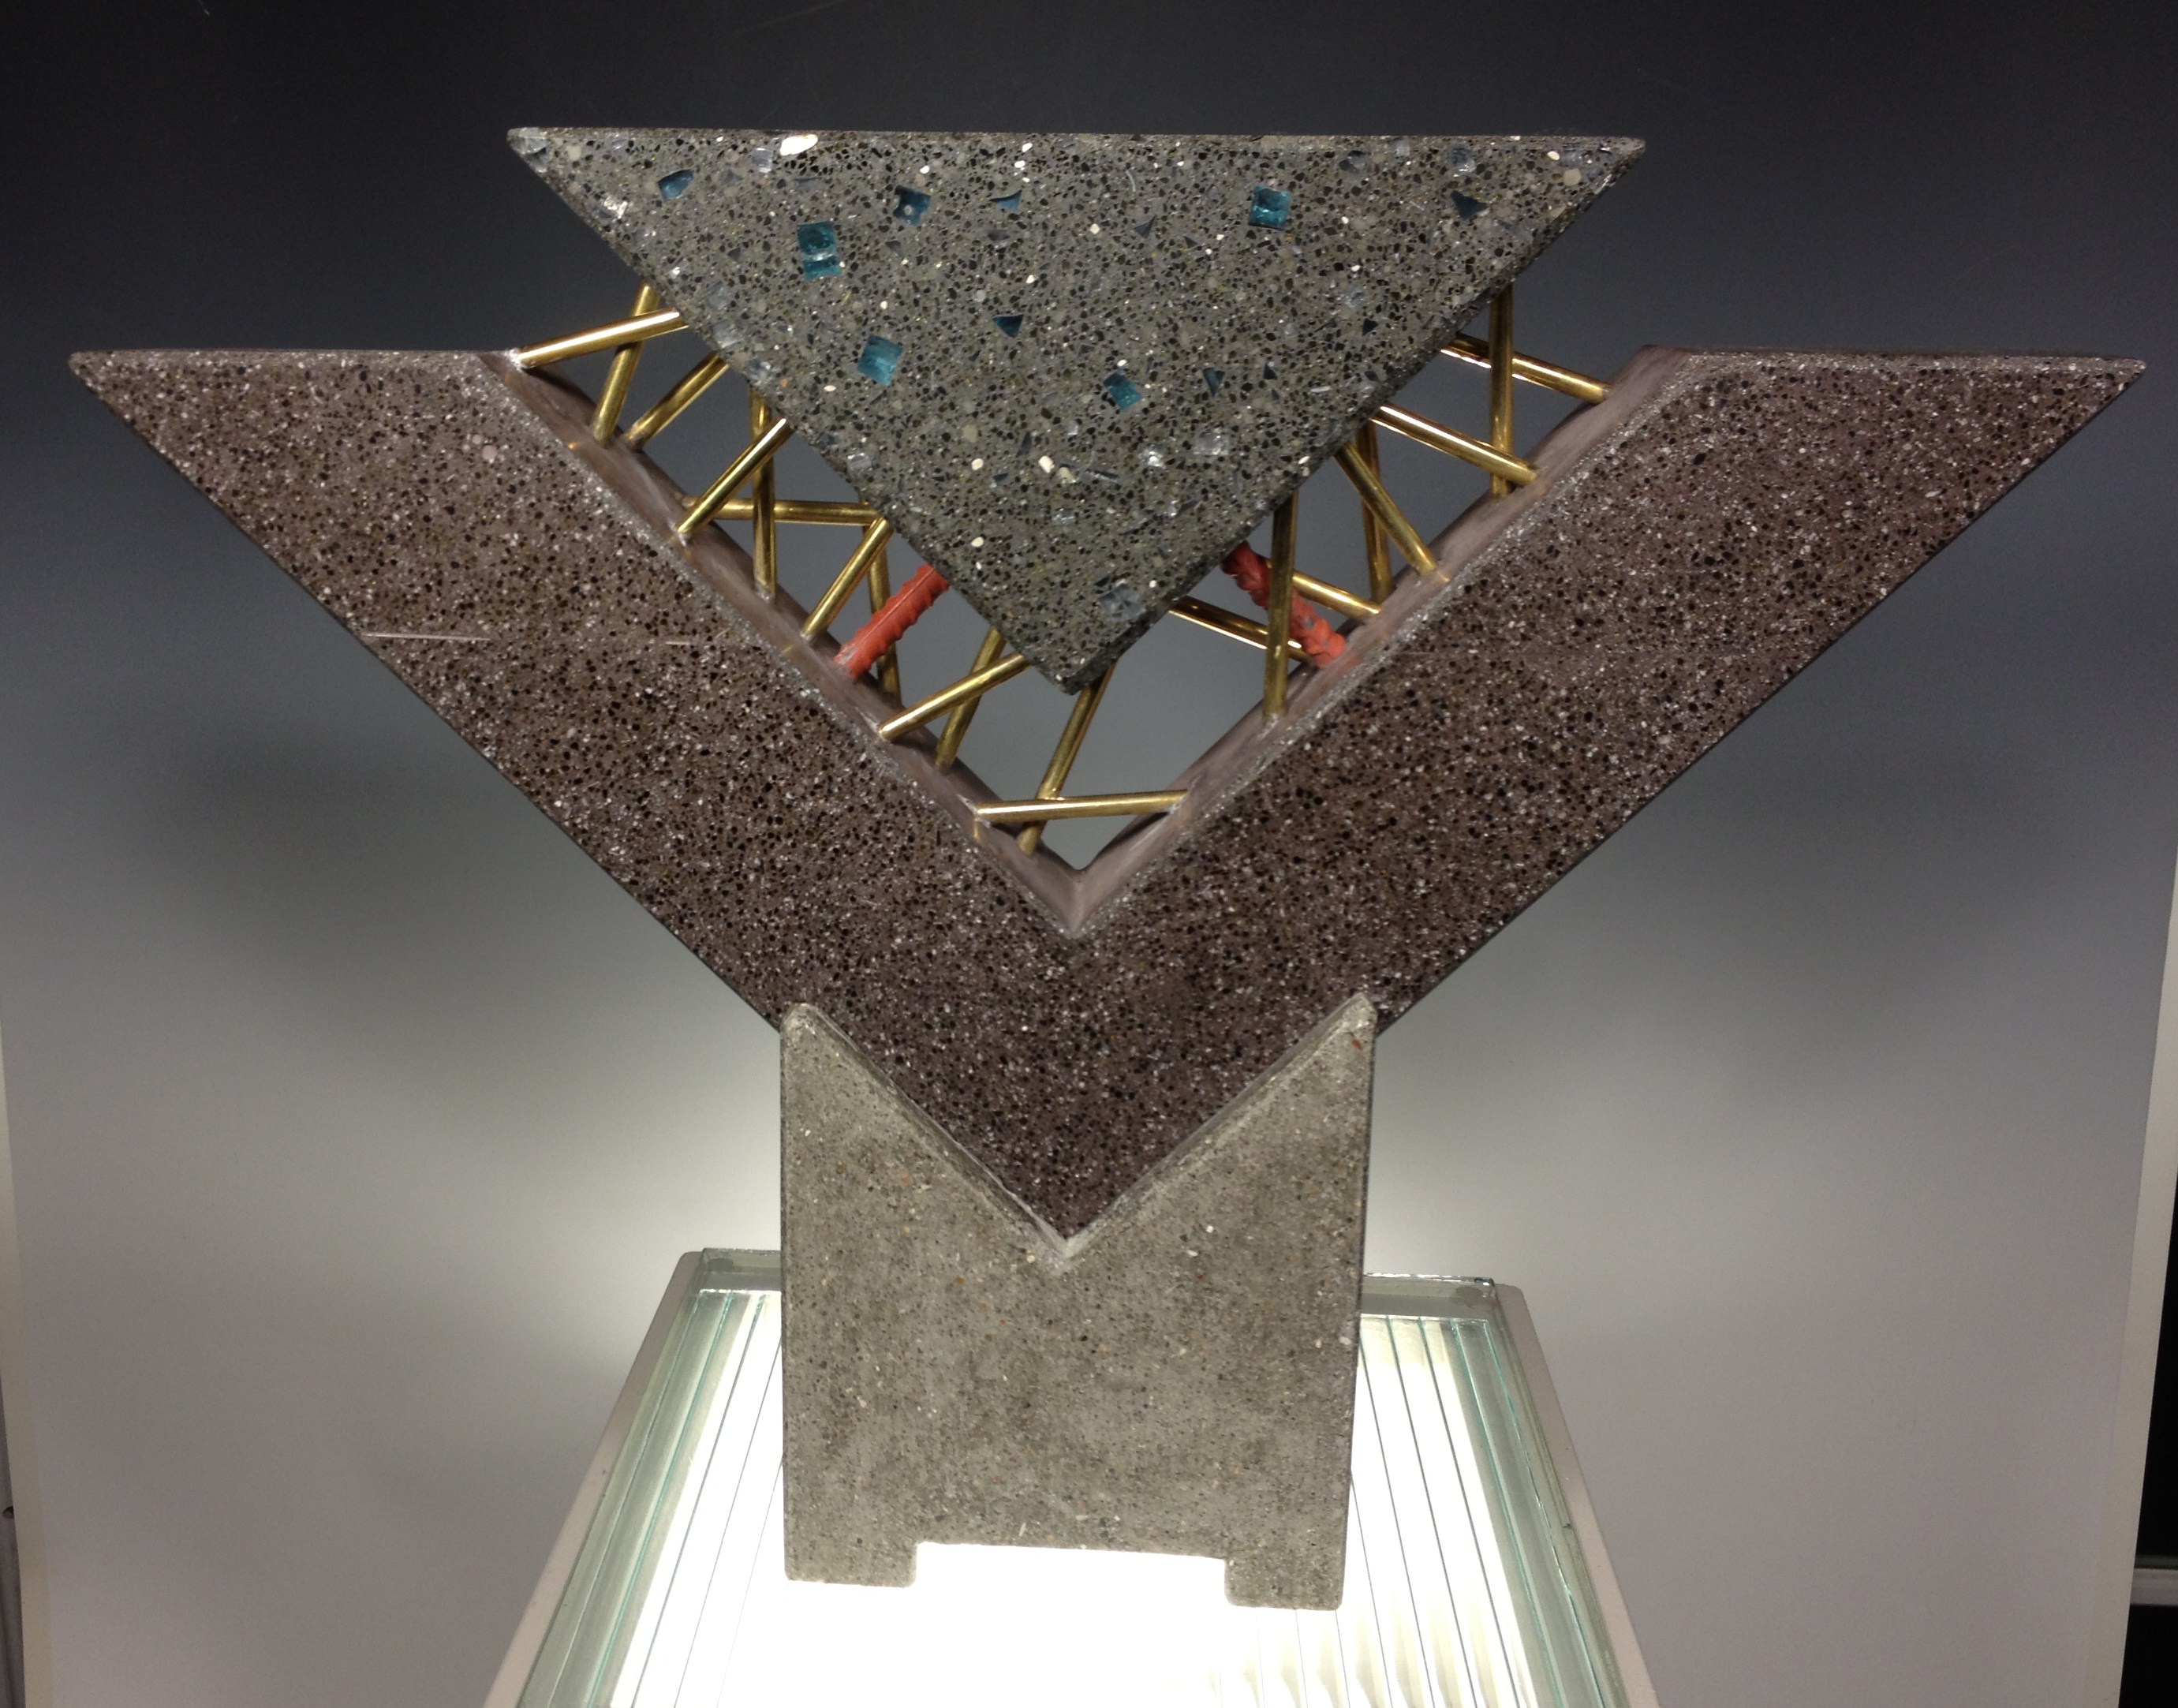 Polished Concrete, glass, and metal : Michael Eddy Artist